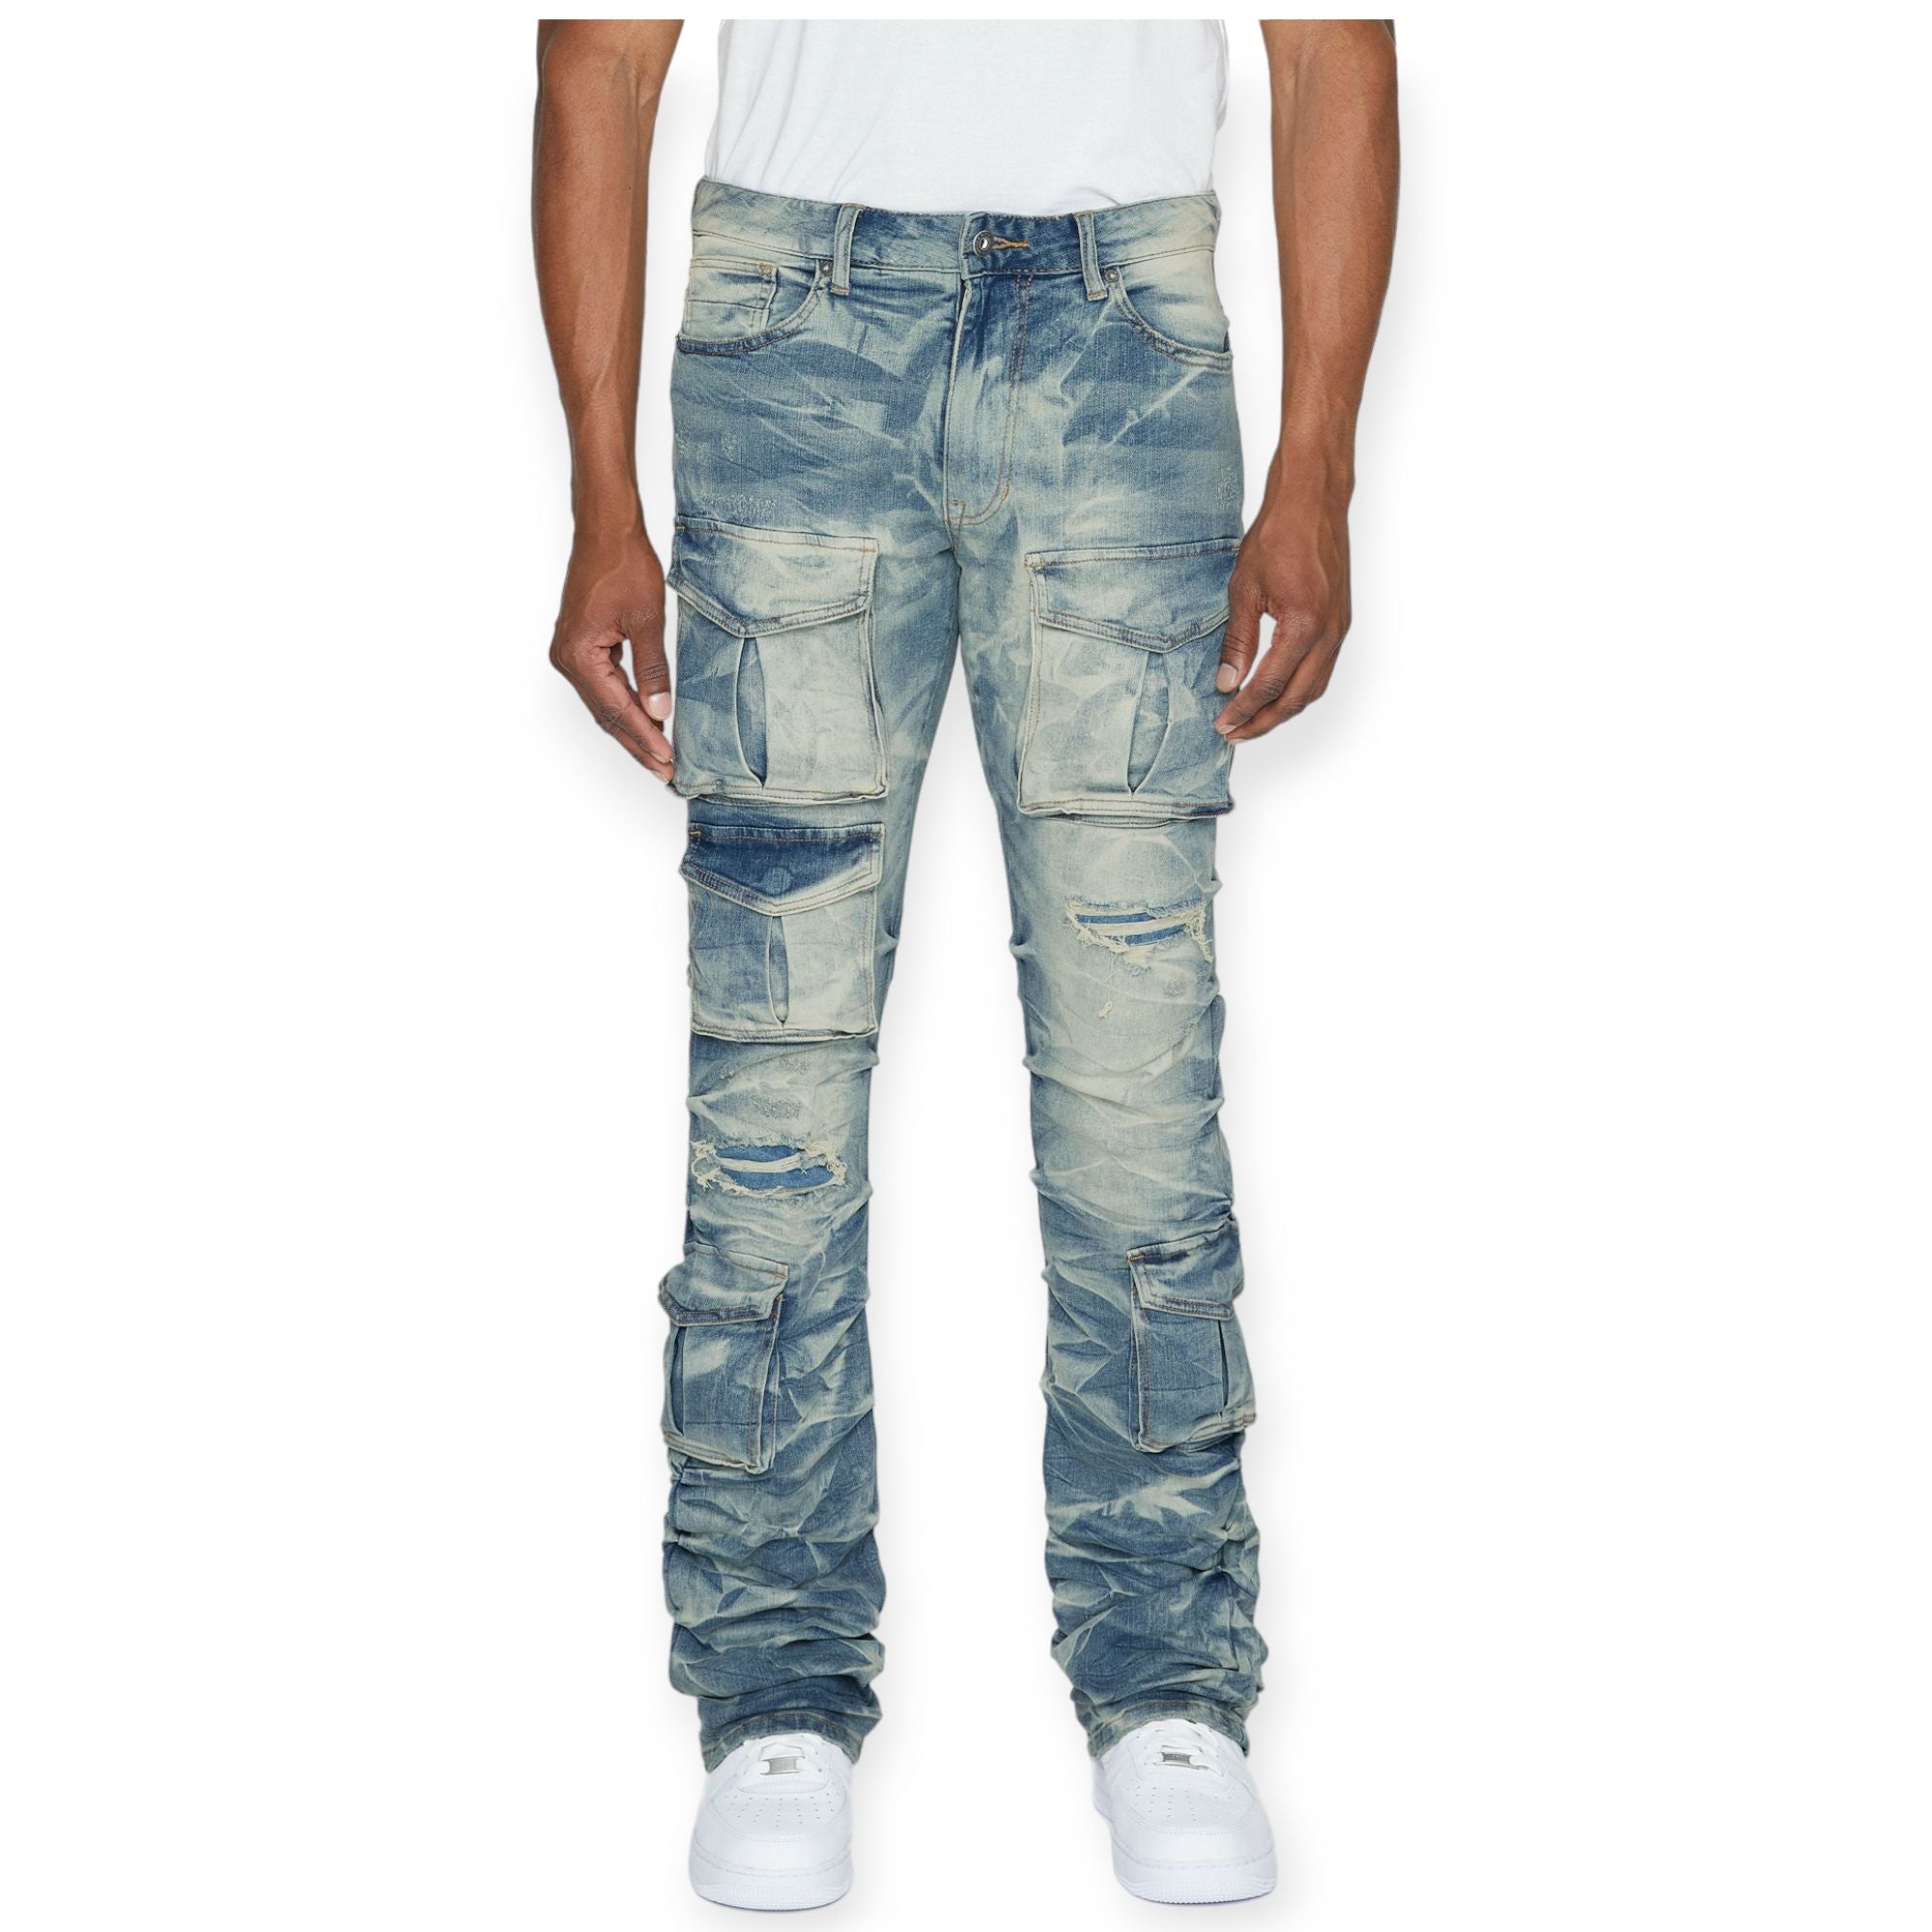 Smoke Rise Men Crankle Effect Jeans (Clyde Blue)-Clyde Blue-32W x 36L-Nexus Clothing